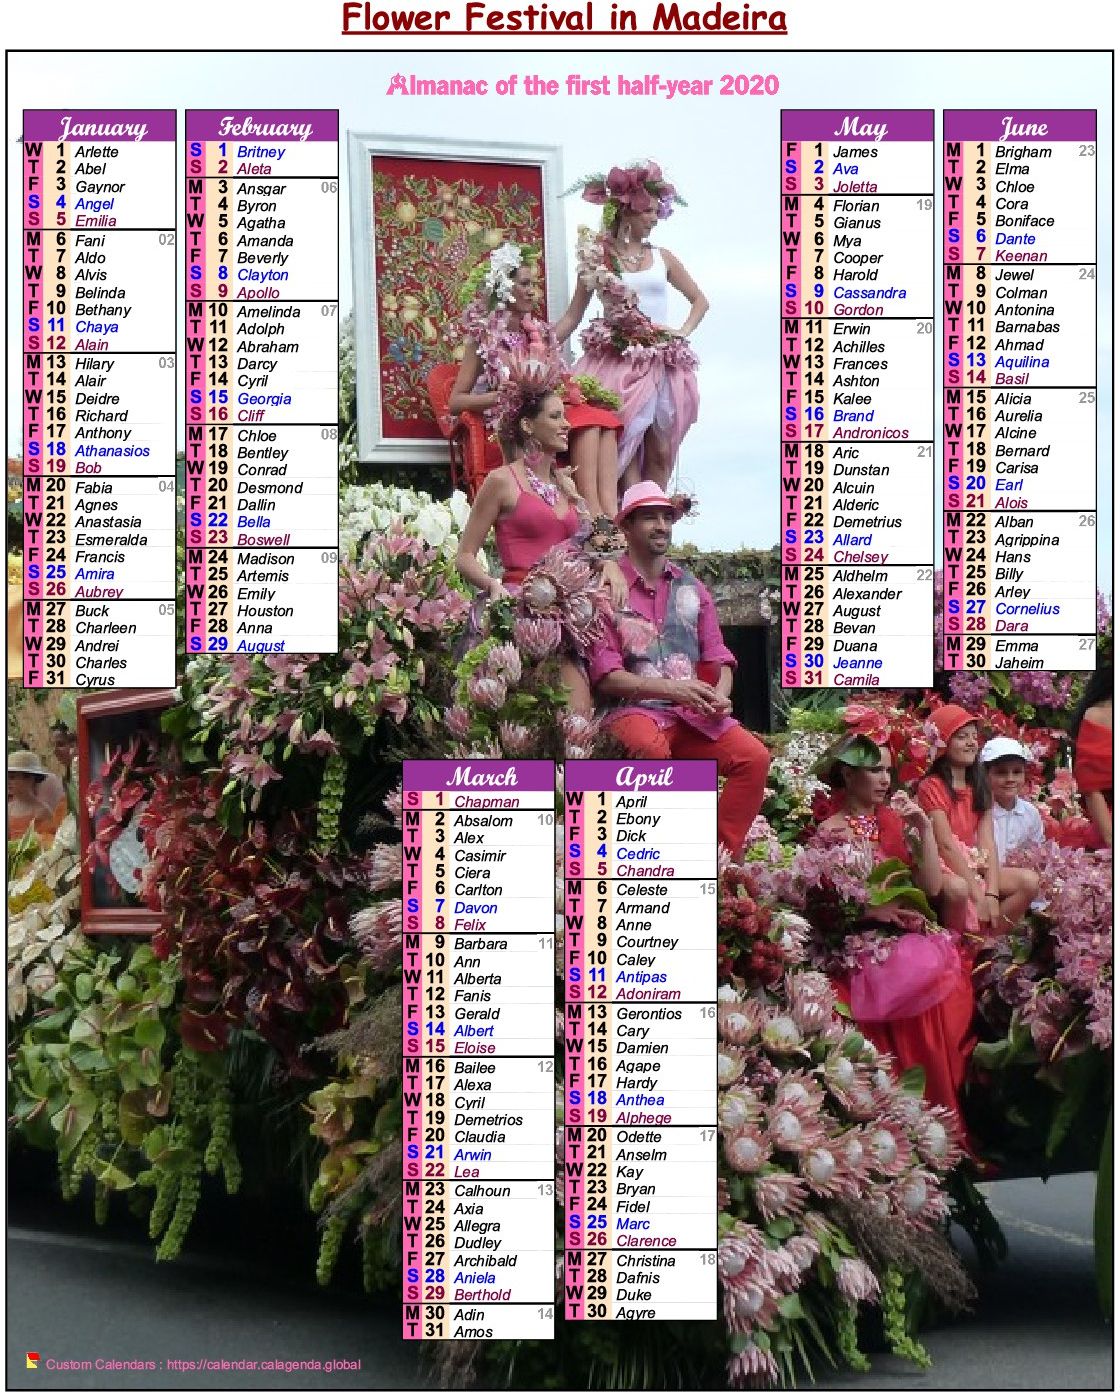 Calendar 2020 half-year flower festival in Madeira